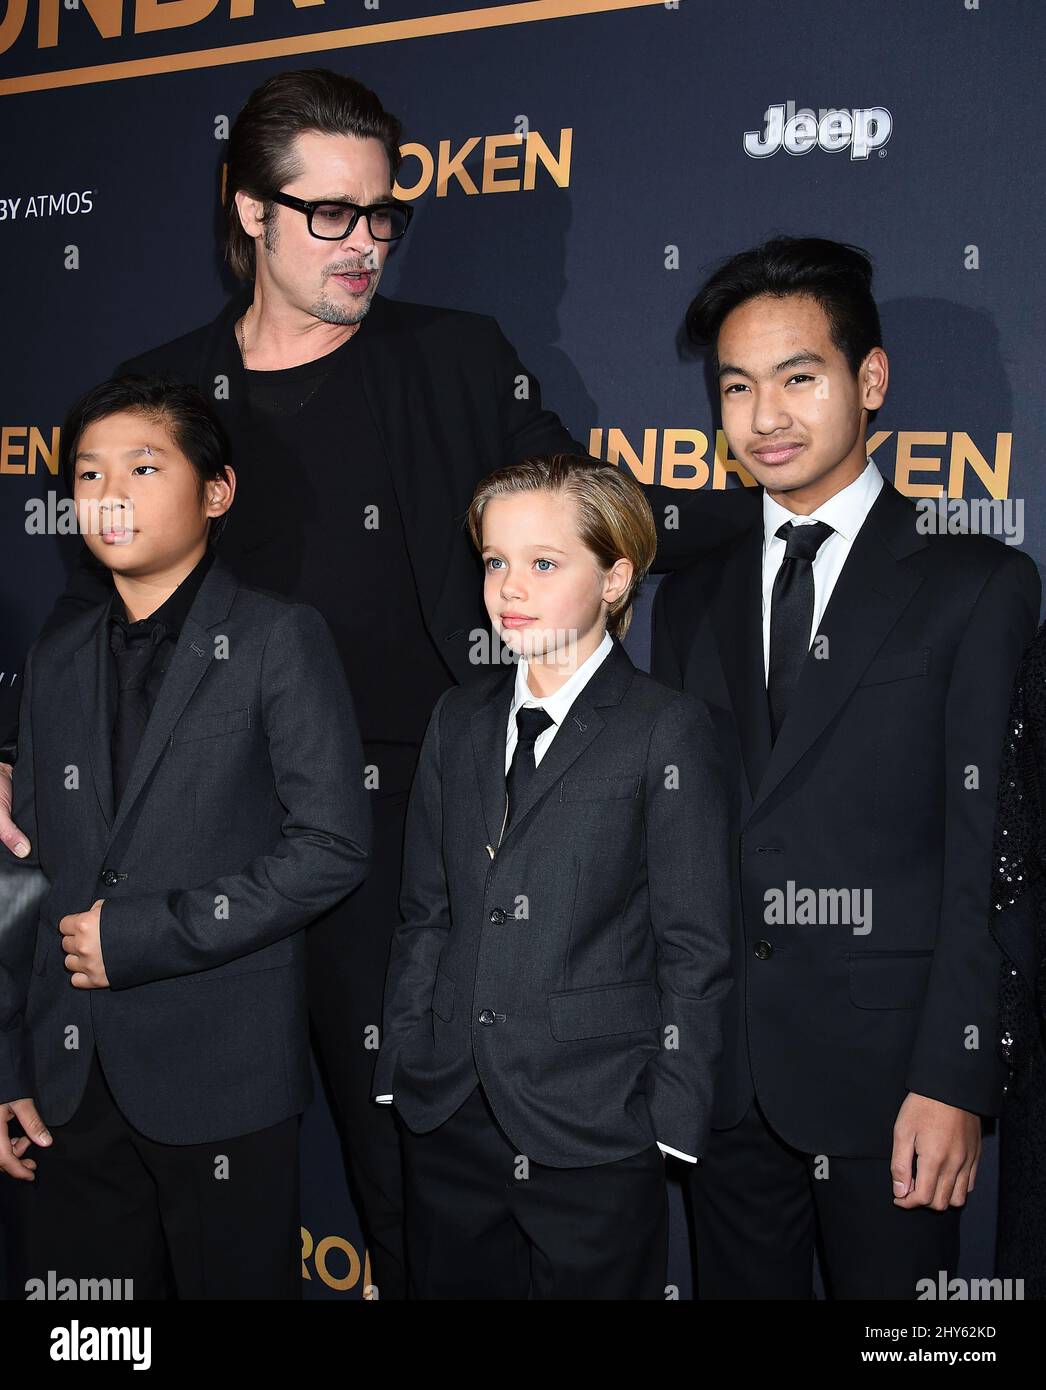 Brad Pitt, Pax Jolie-Pitt, Shiloh Jolie-Pitt and Maddox Jolie attending the 'Unbroken' Premiere in Los Angeles Stock Photo